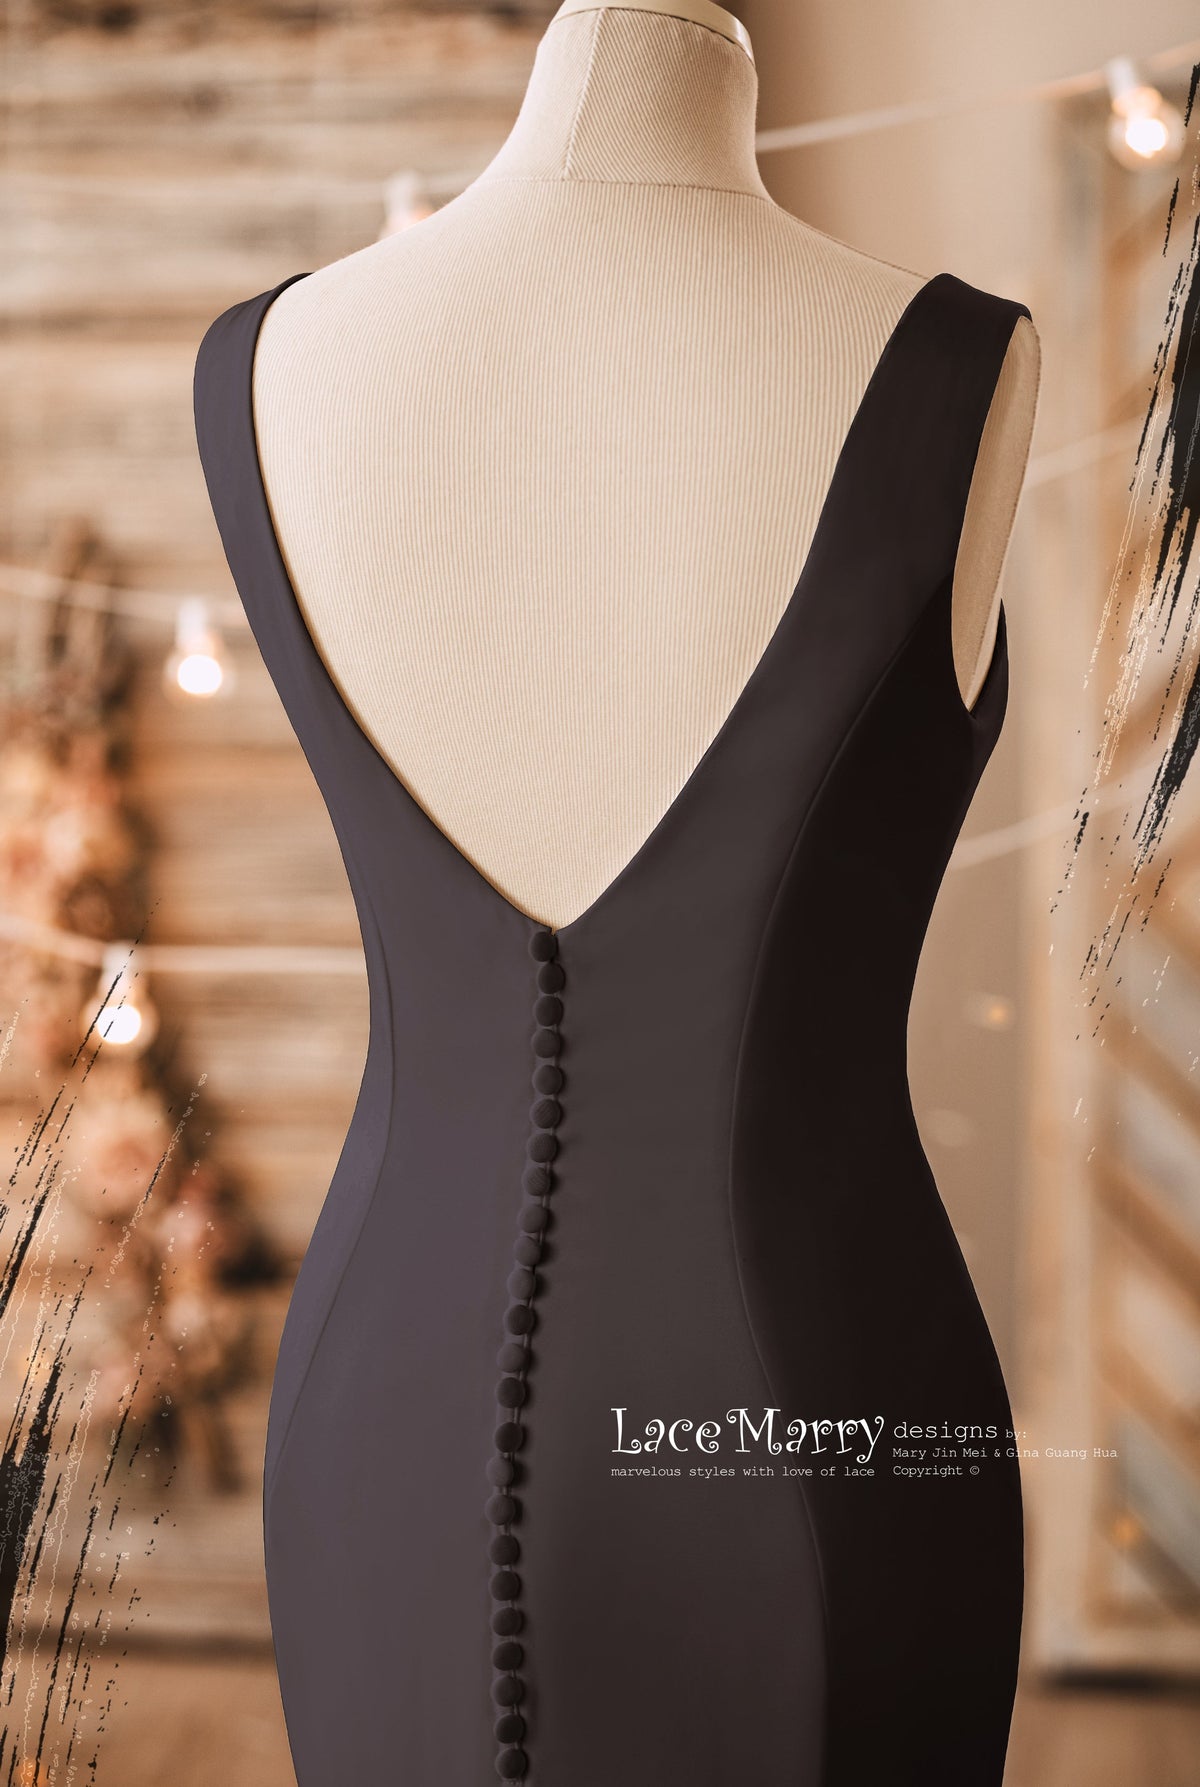 CLEMENTINE / Black Wedding Dress in Simple and Elegant Design